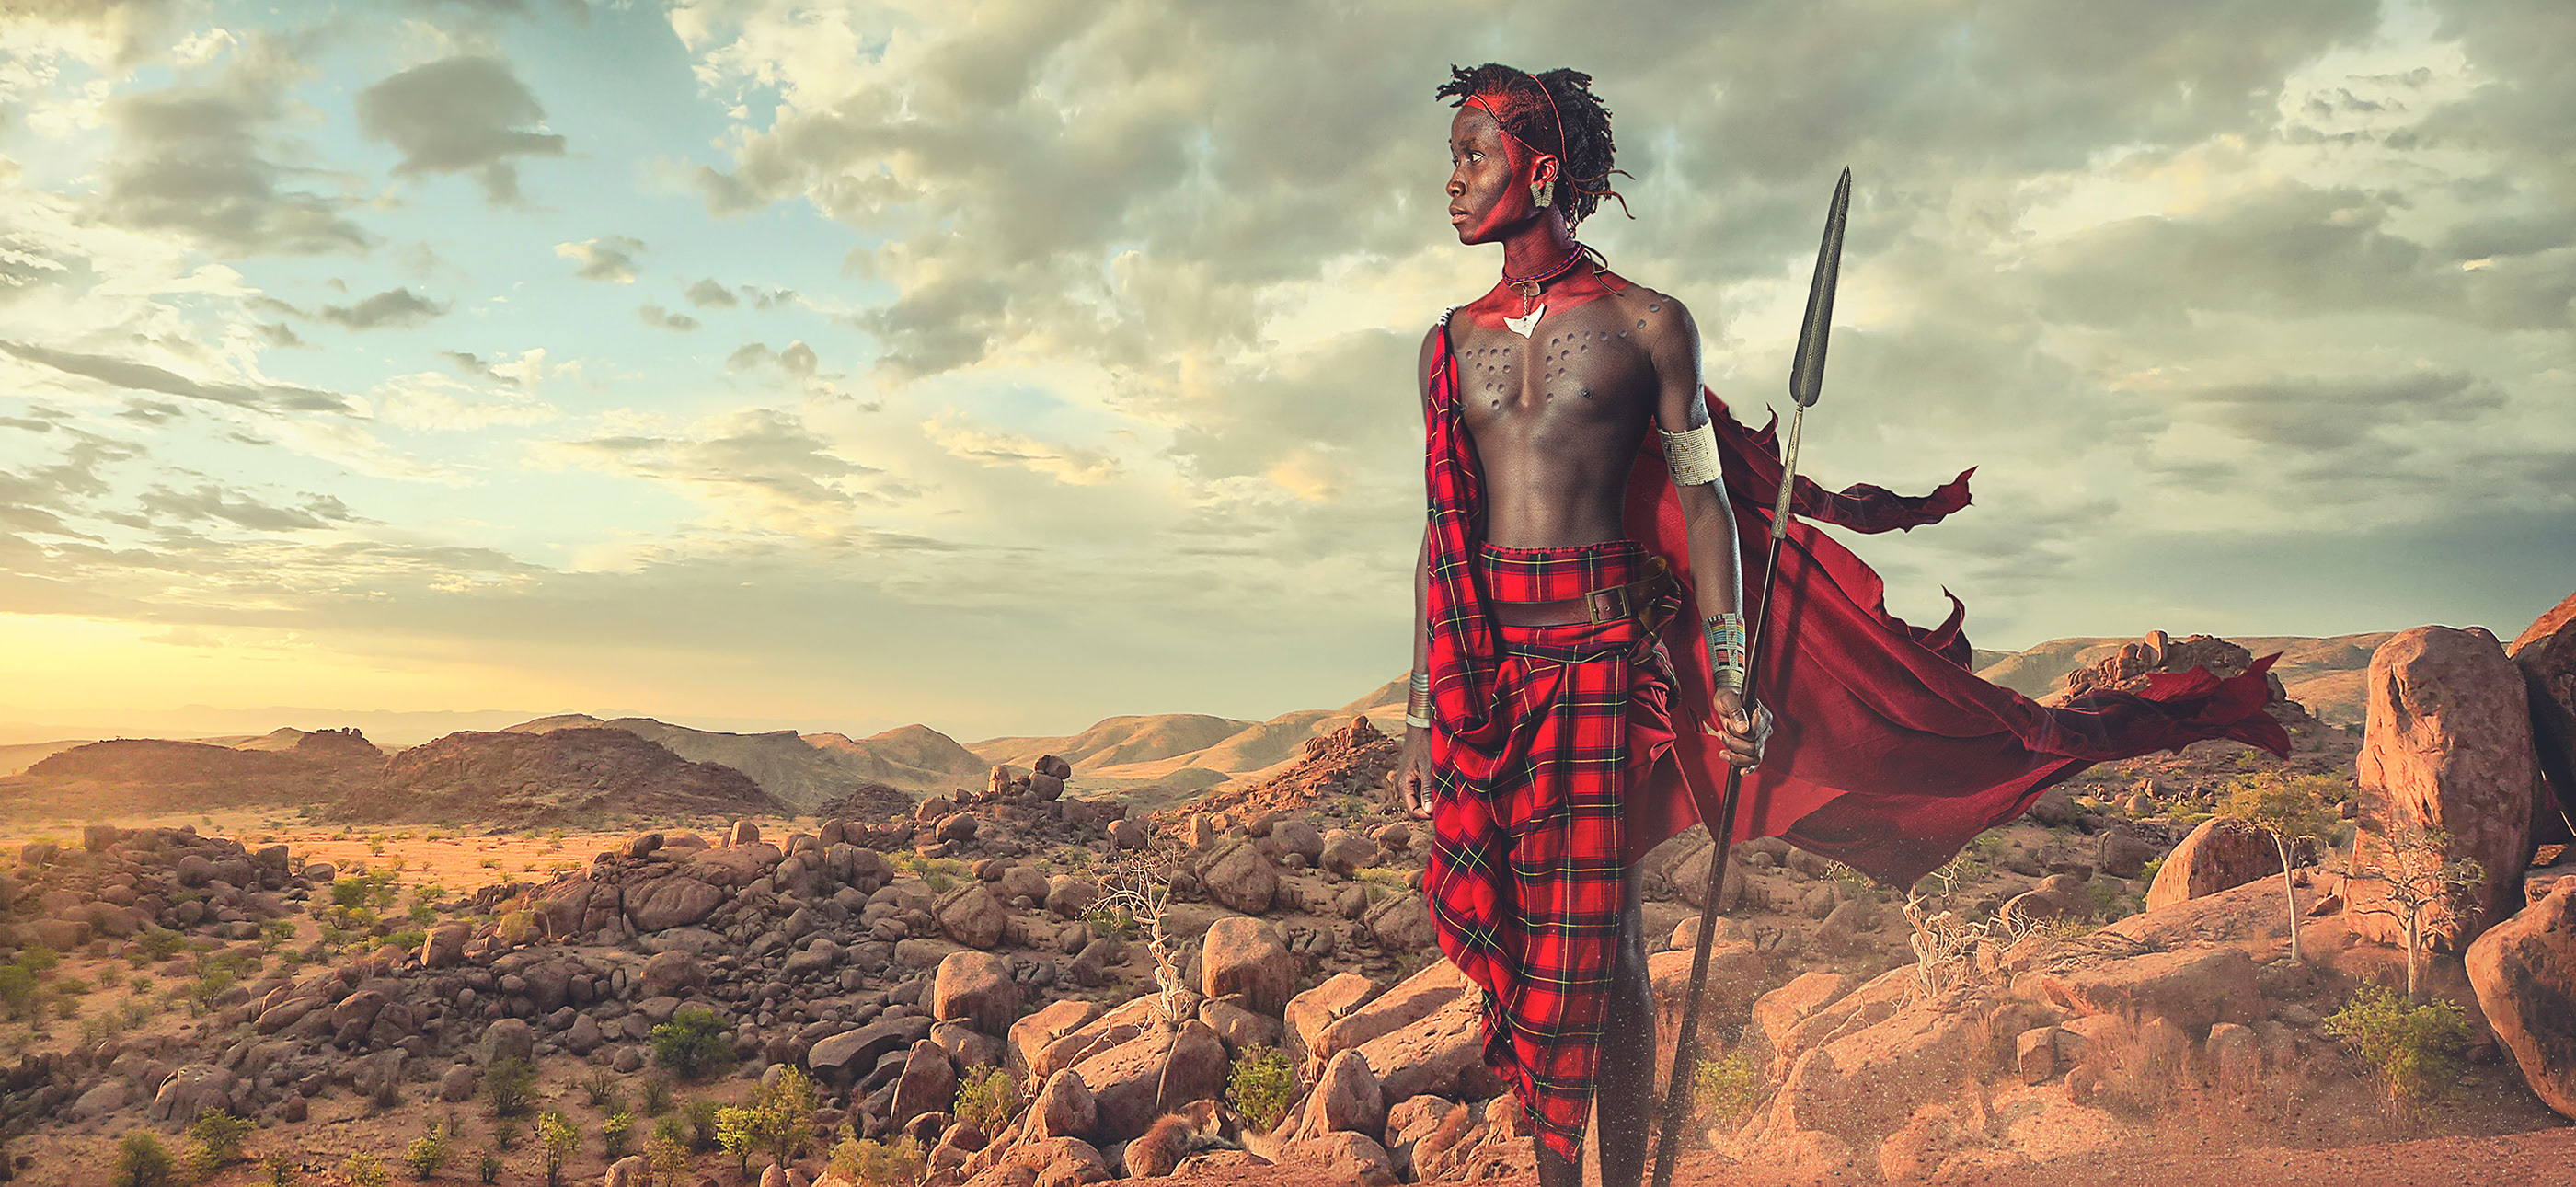 Lee Howell Photography tribe Maasai digital manipulation Lee Howell.